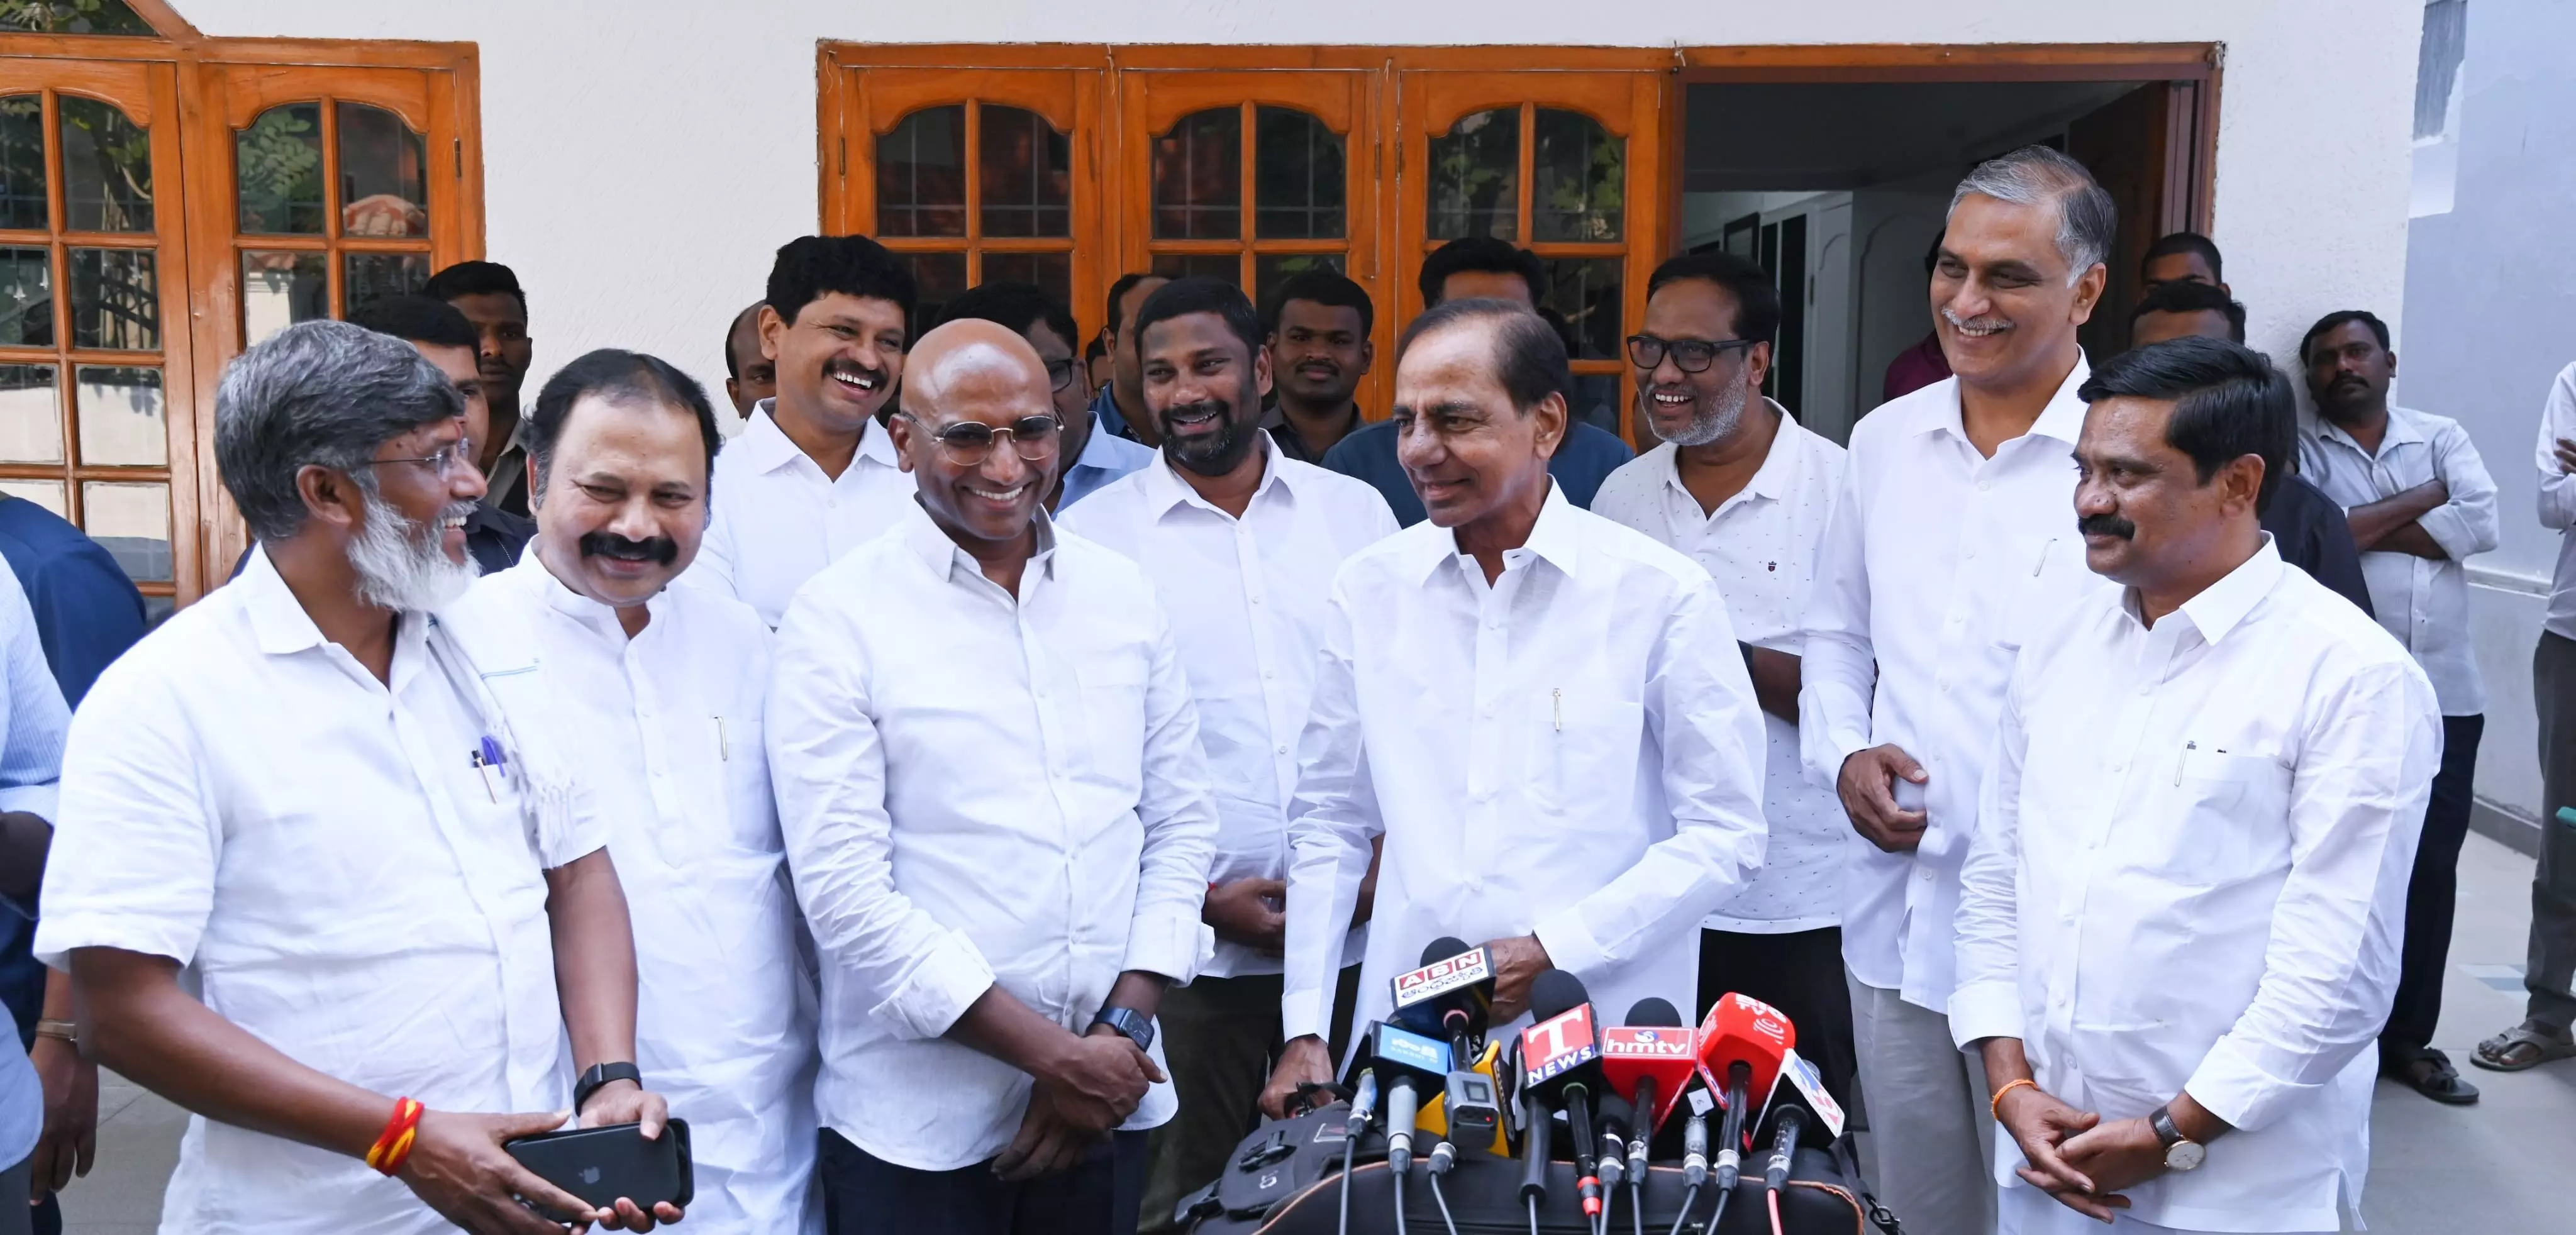 Mayavati cleared BSP-BRS alliance, clarity on seat adjustment soon: RS Praveen Kumar